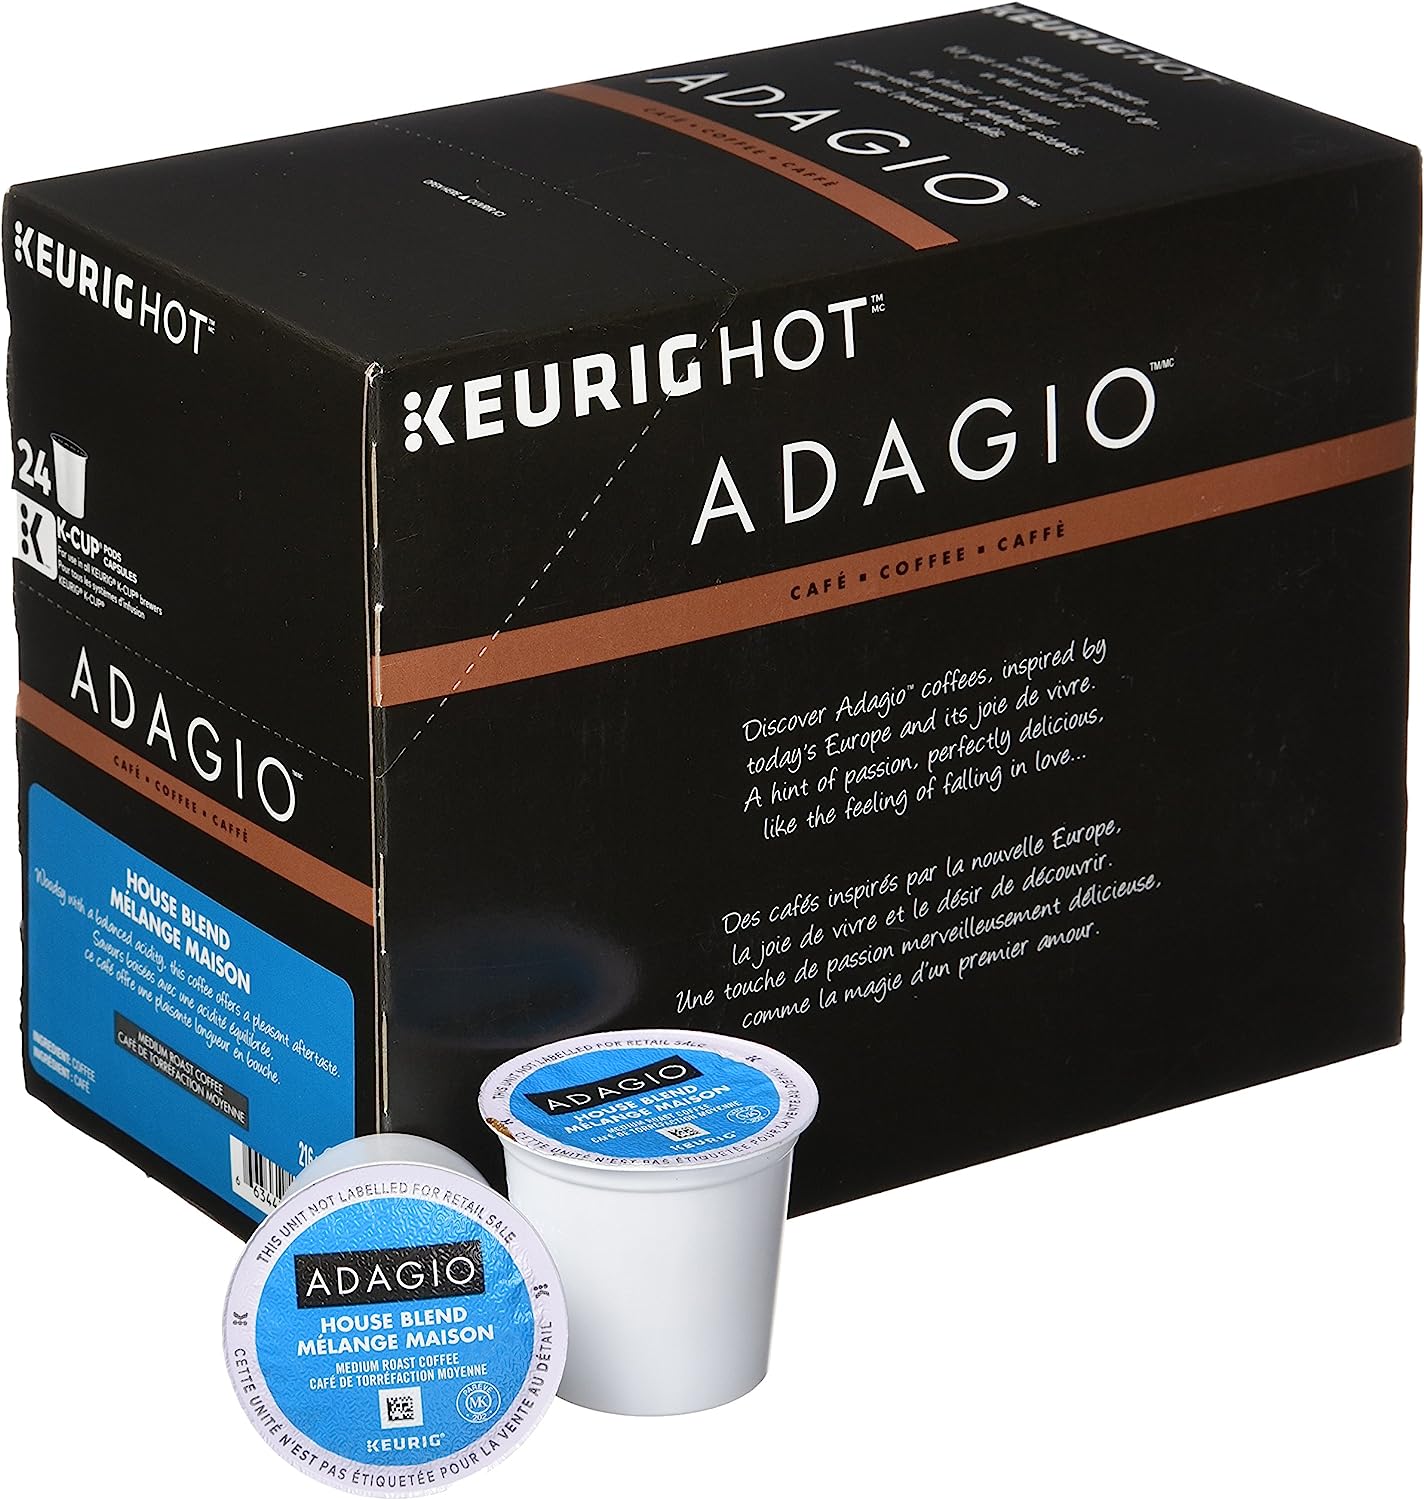 Adagio House Blend Medium Roast Single Serve K-Cups - Pack of 24 - Case of 4